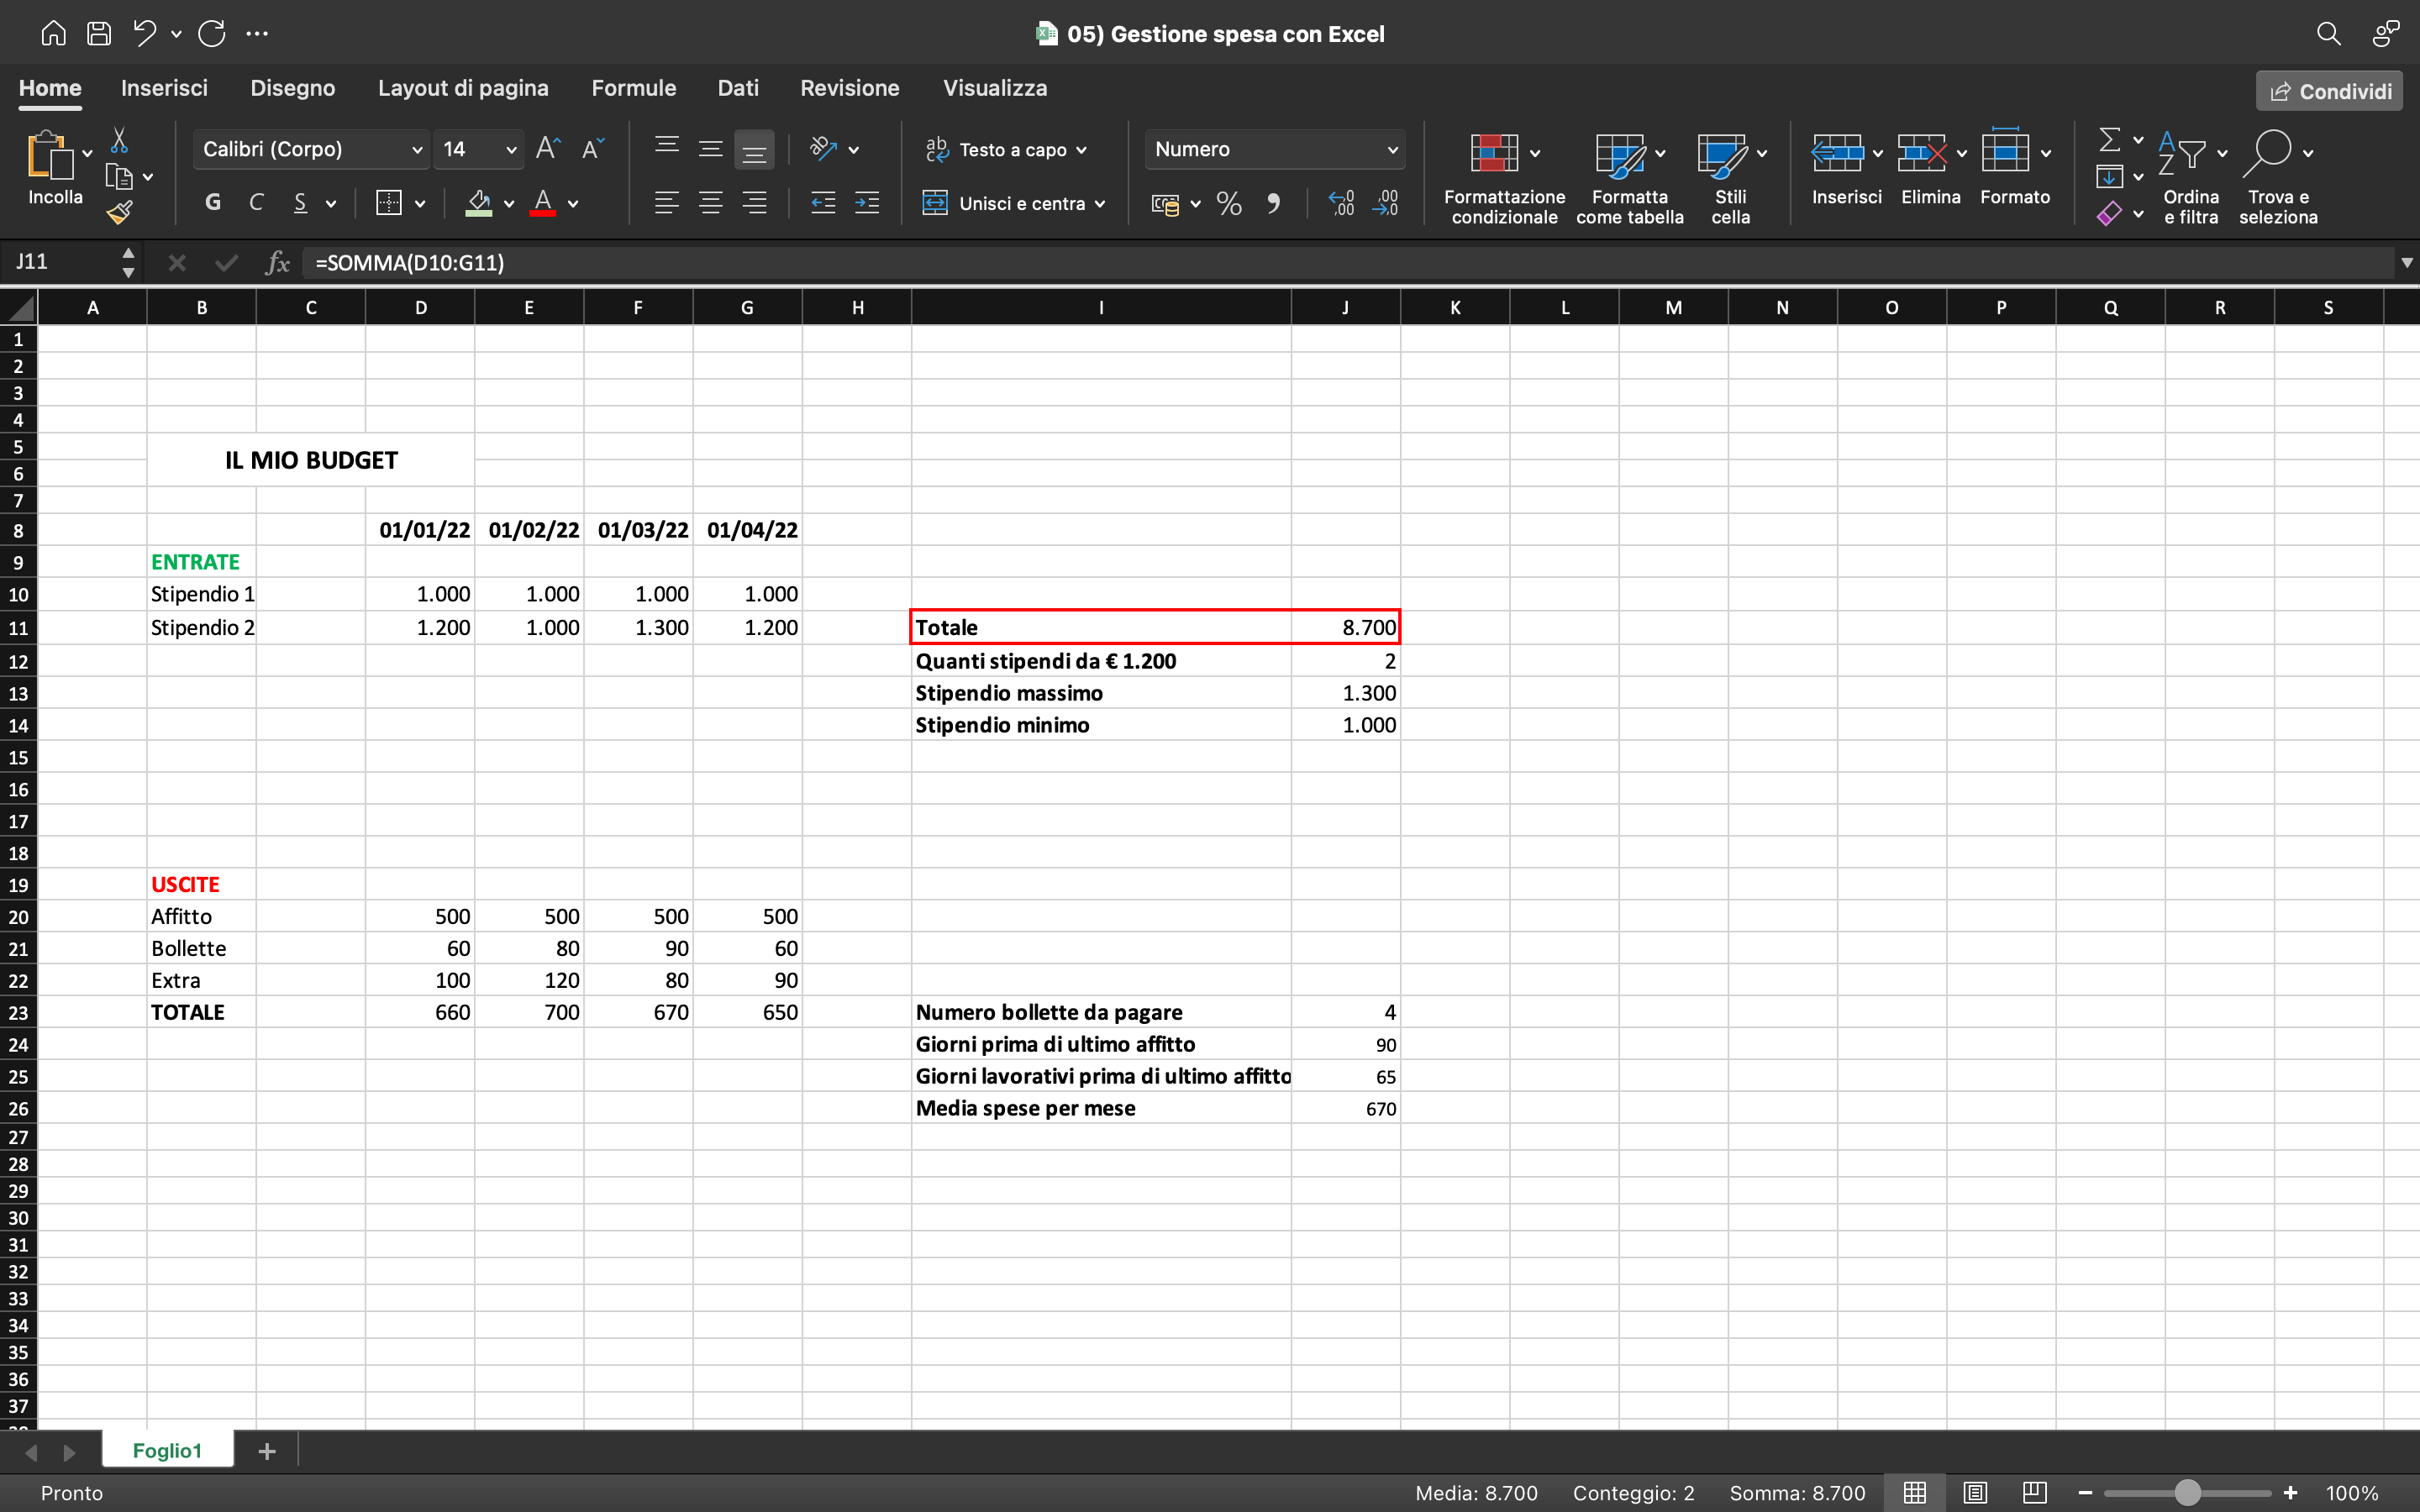 Gestione spese in Excel: come sommare o contare entrate e uscite